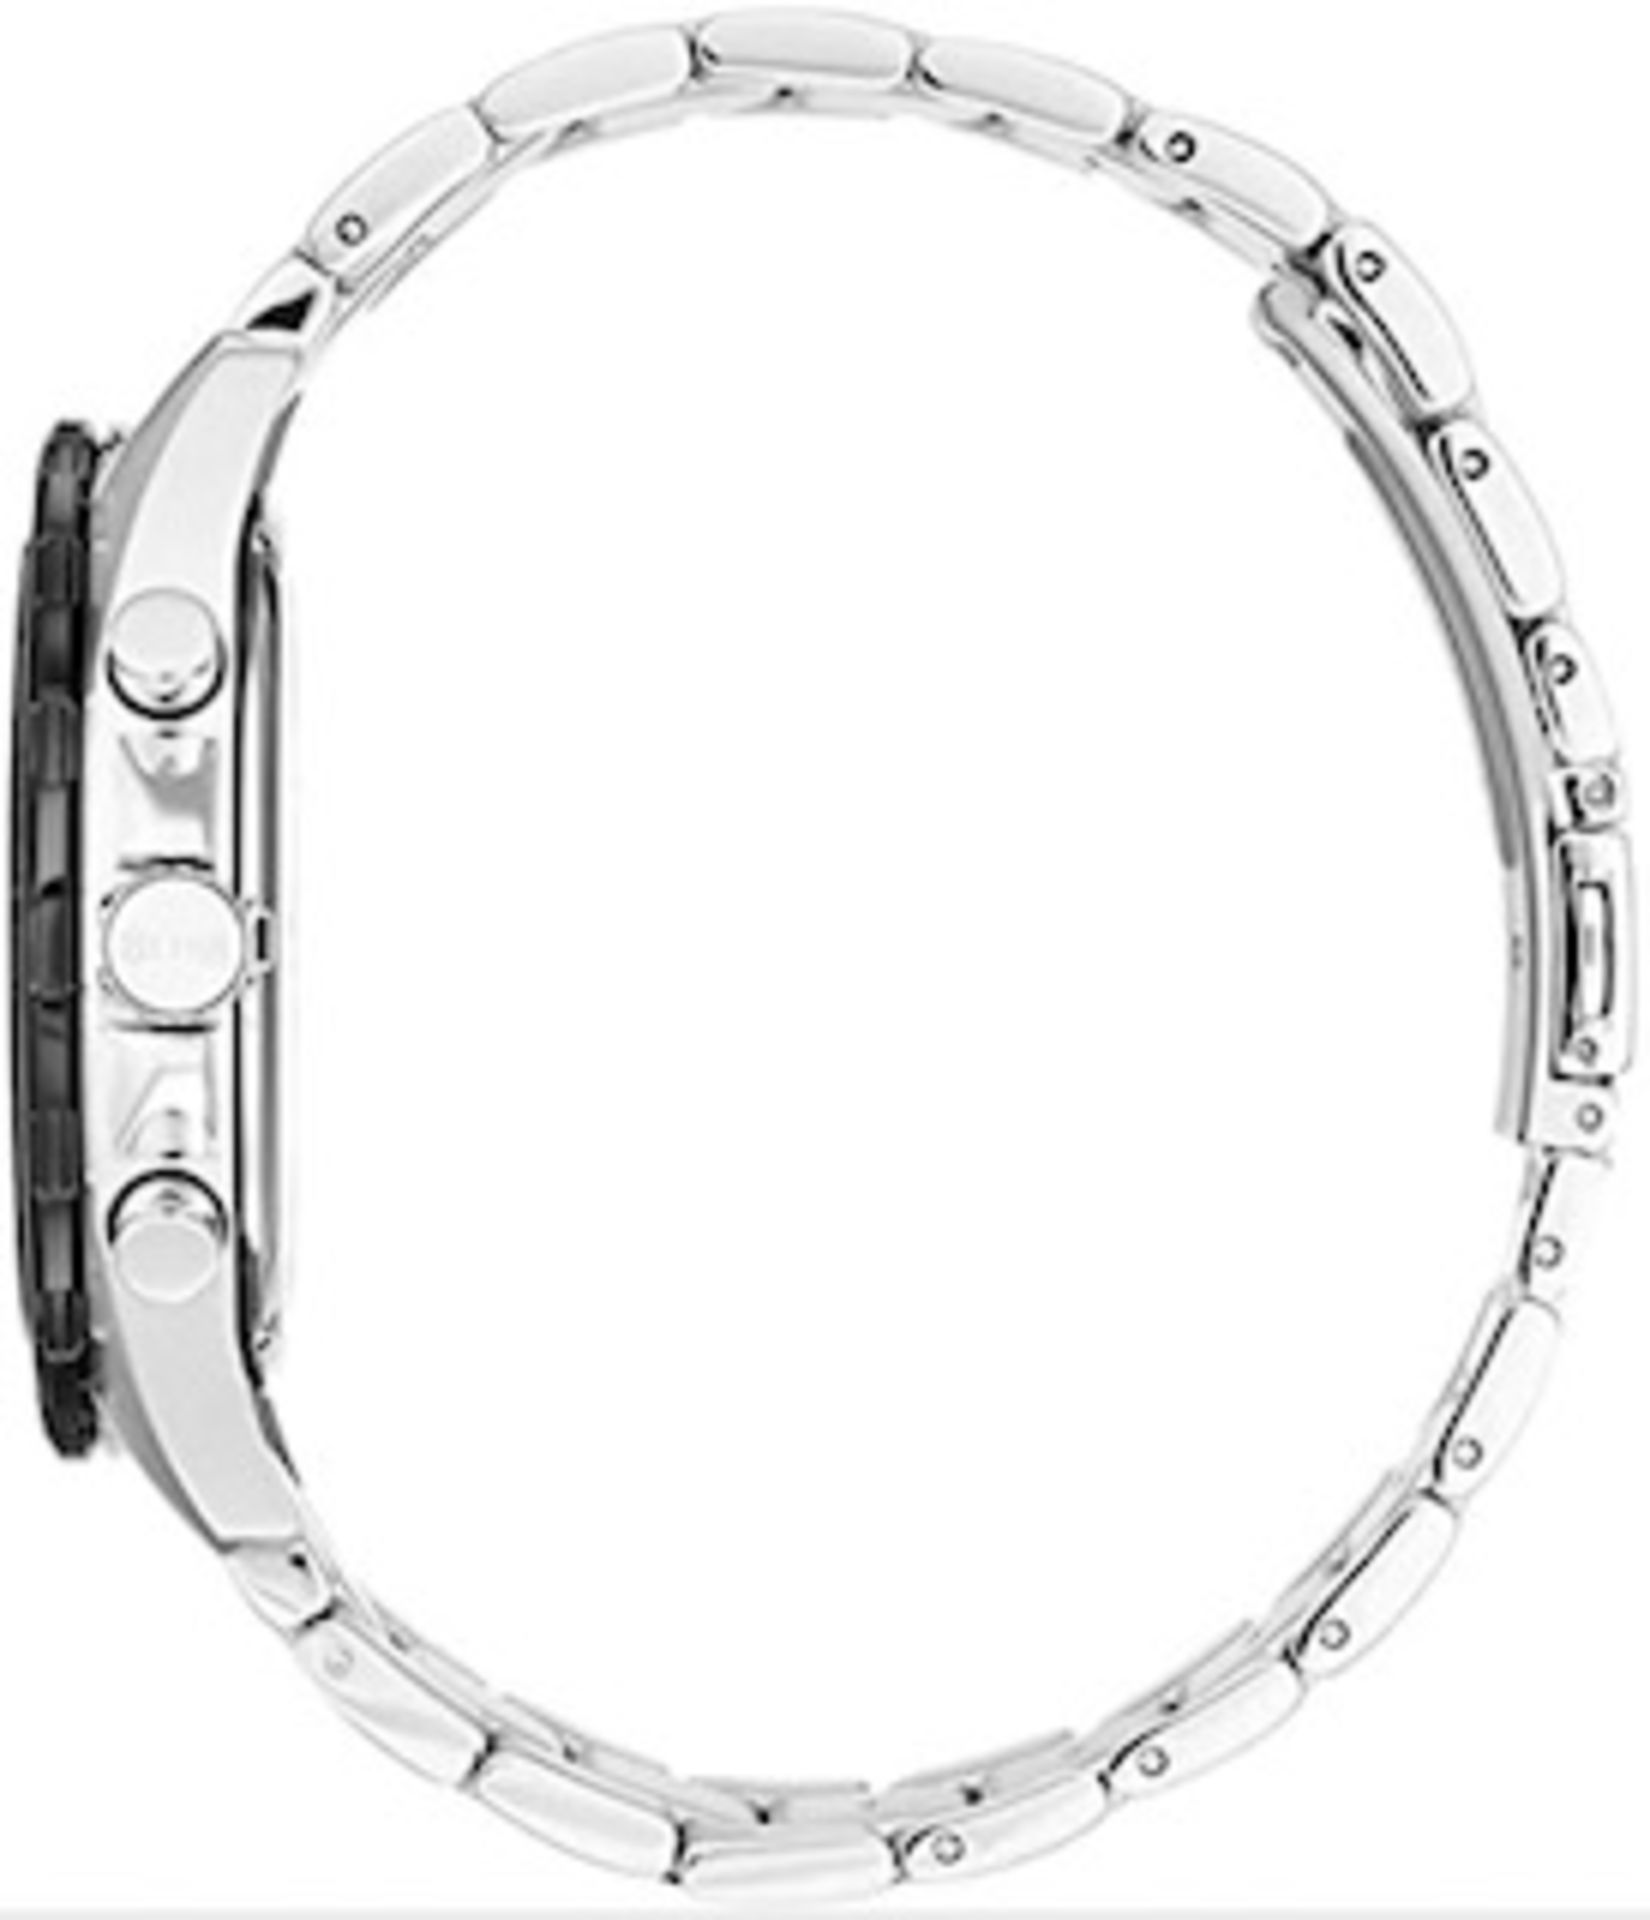 Hugo Boss 1513680 Men's Intensity Black Face Silver Bracelet Quartz Chronograph Watch - Image 5 of 6